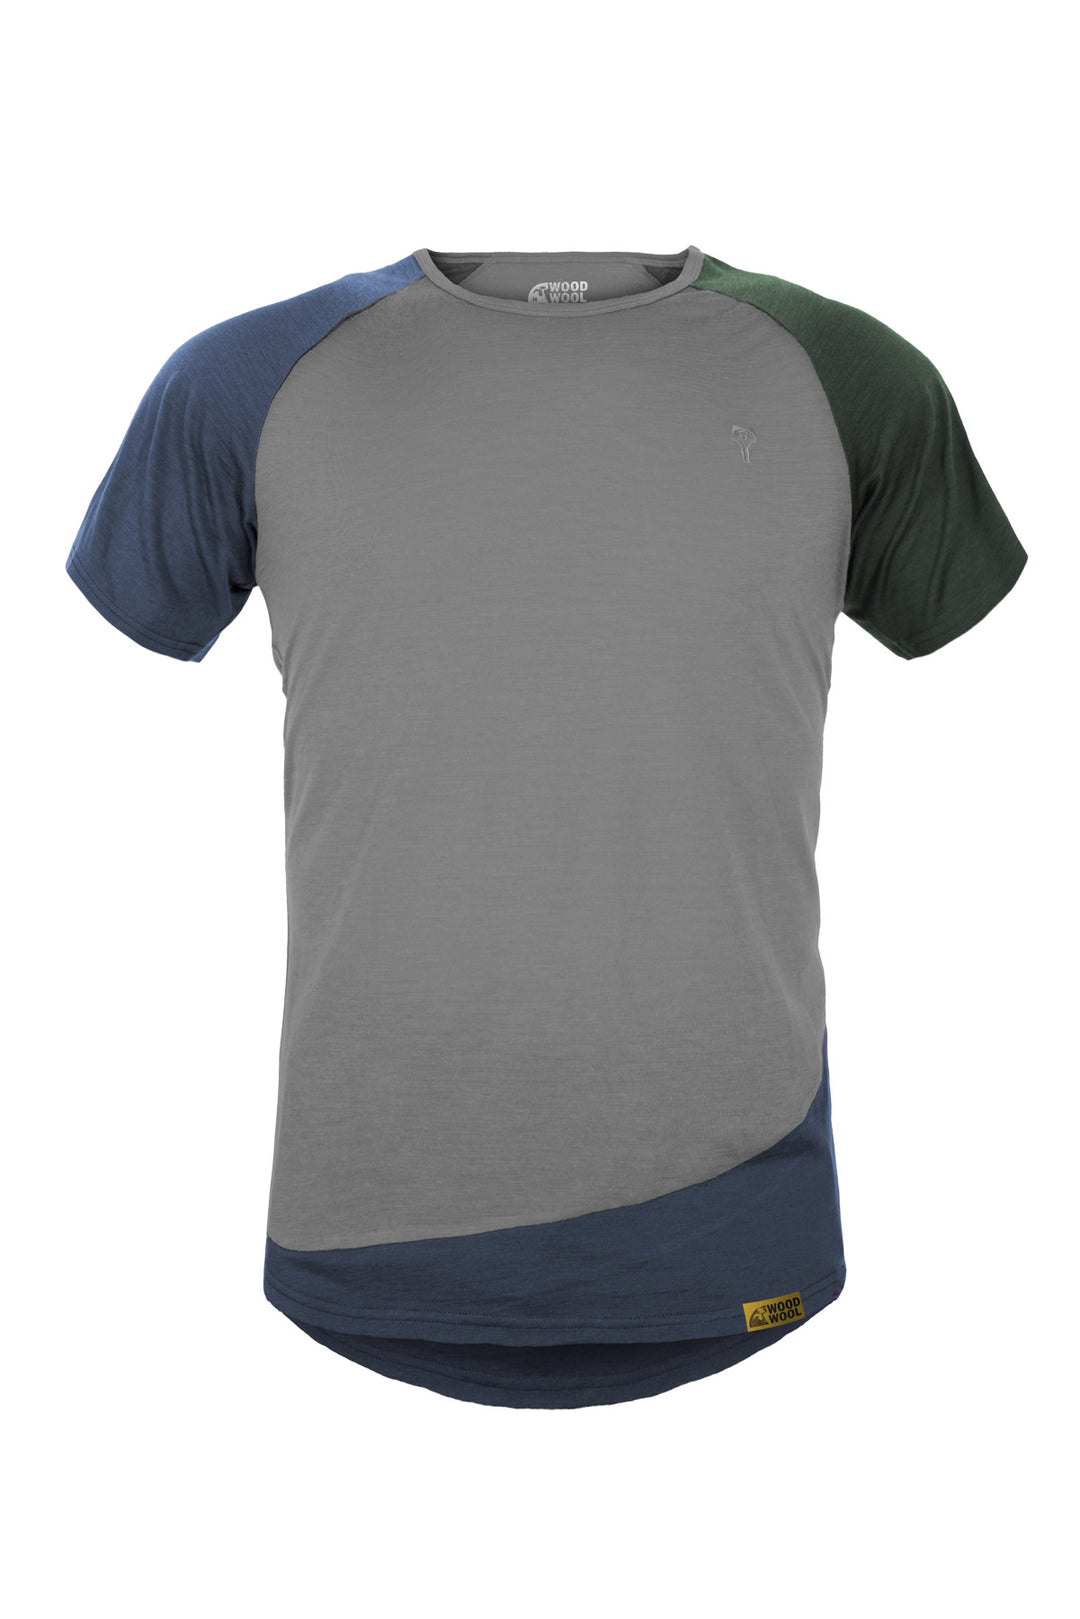 WoodWool T-Shirt Mr. Kirk - Slate Grey